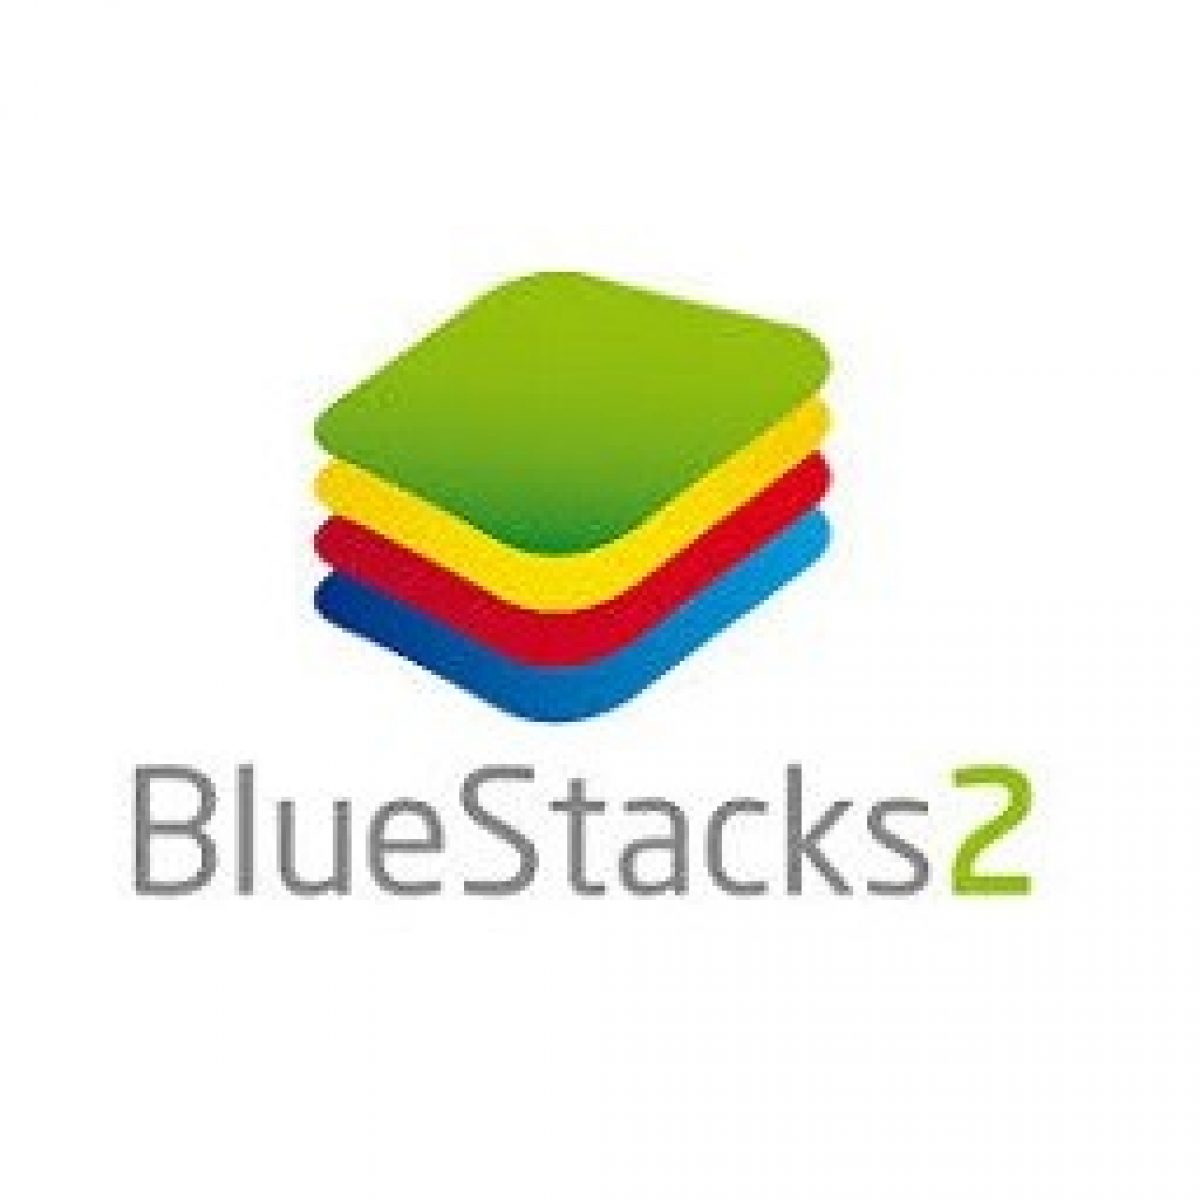 bluestacks 2 download for windows 10